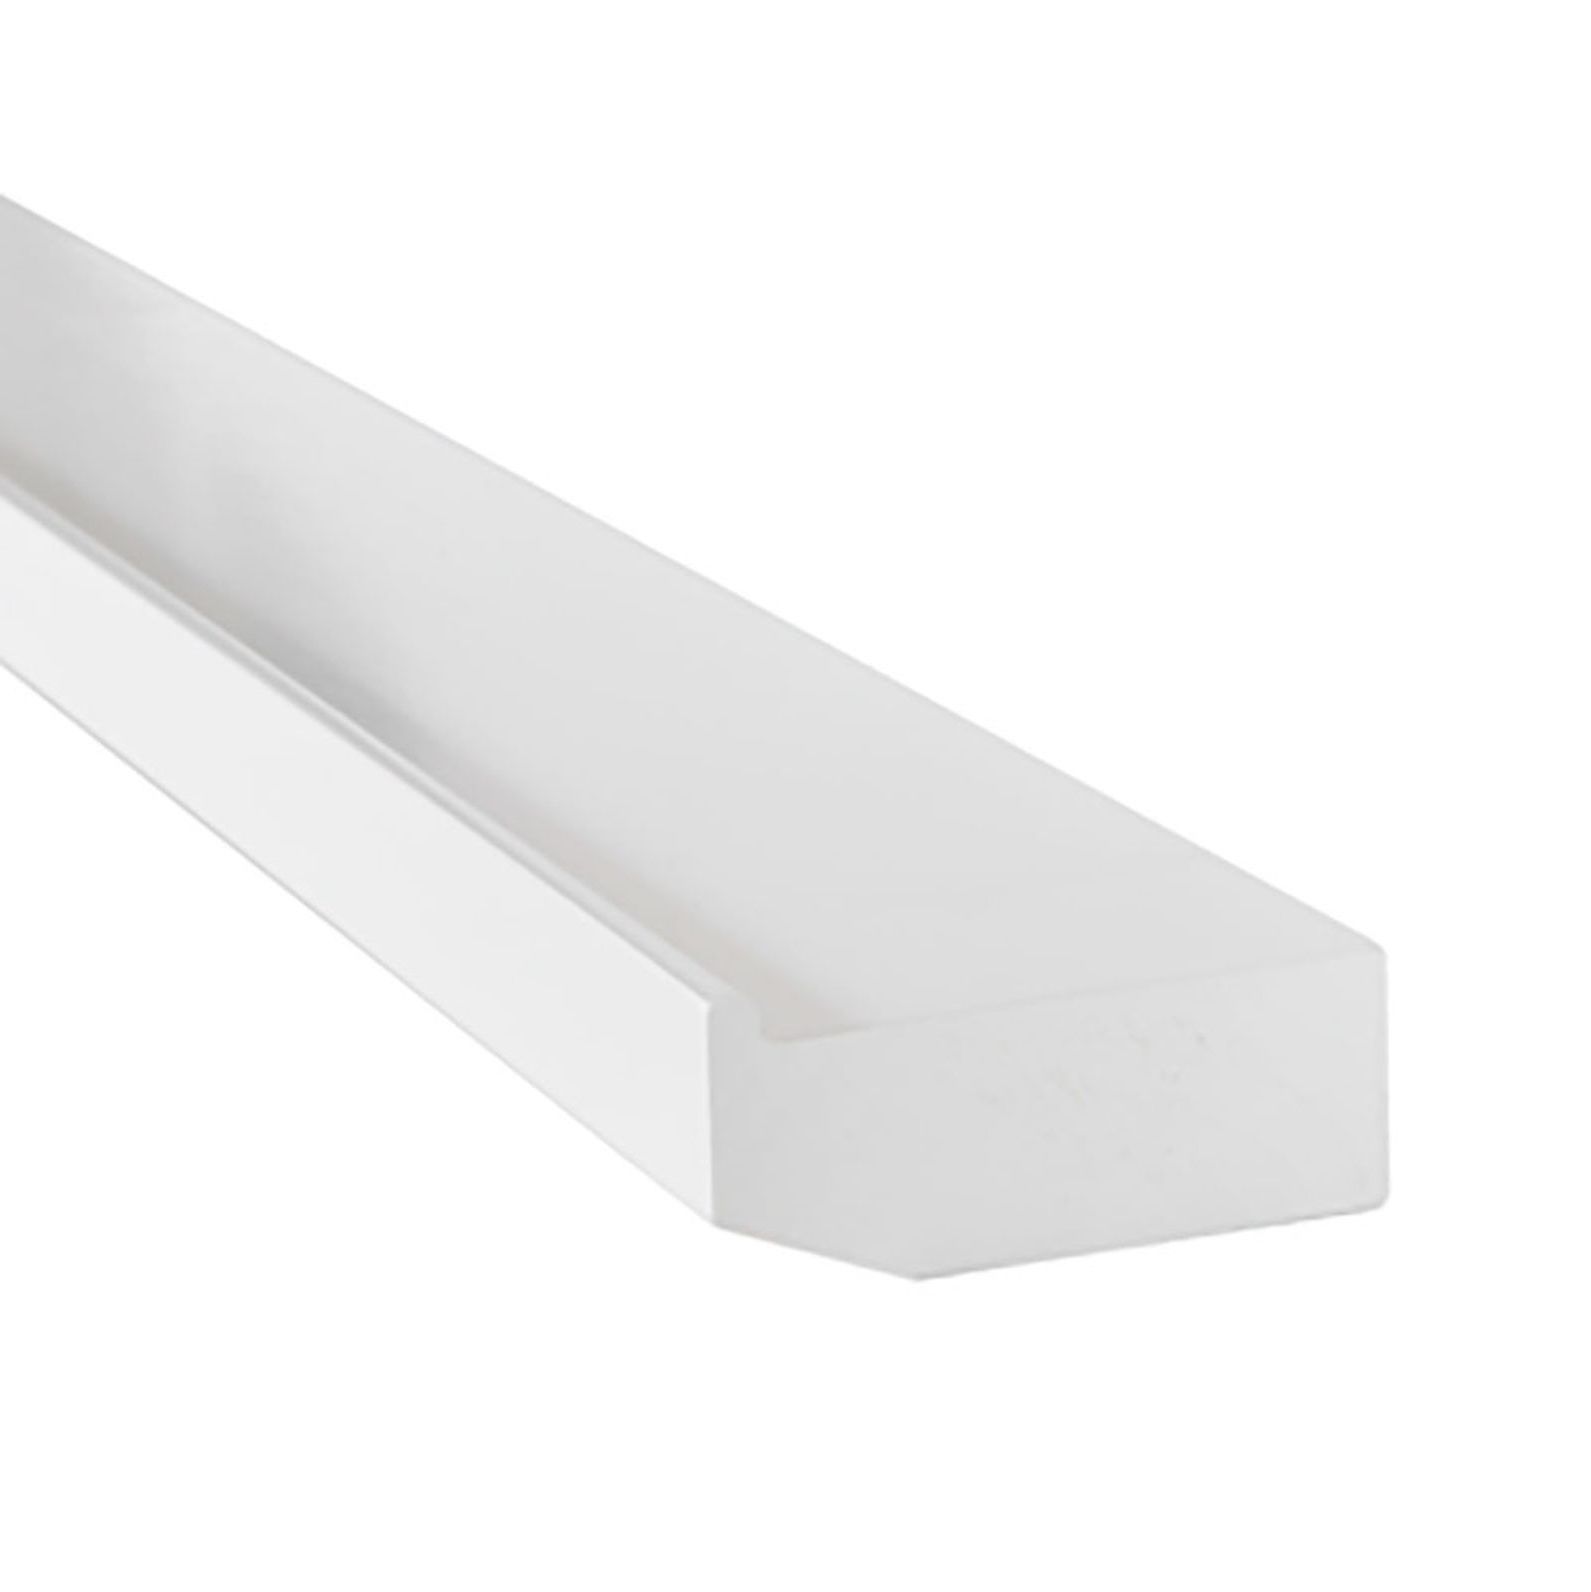 Floating wall shelf – white